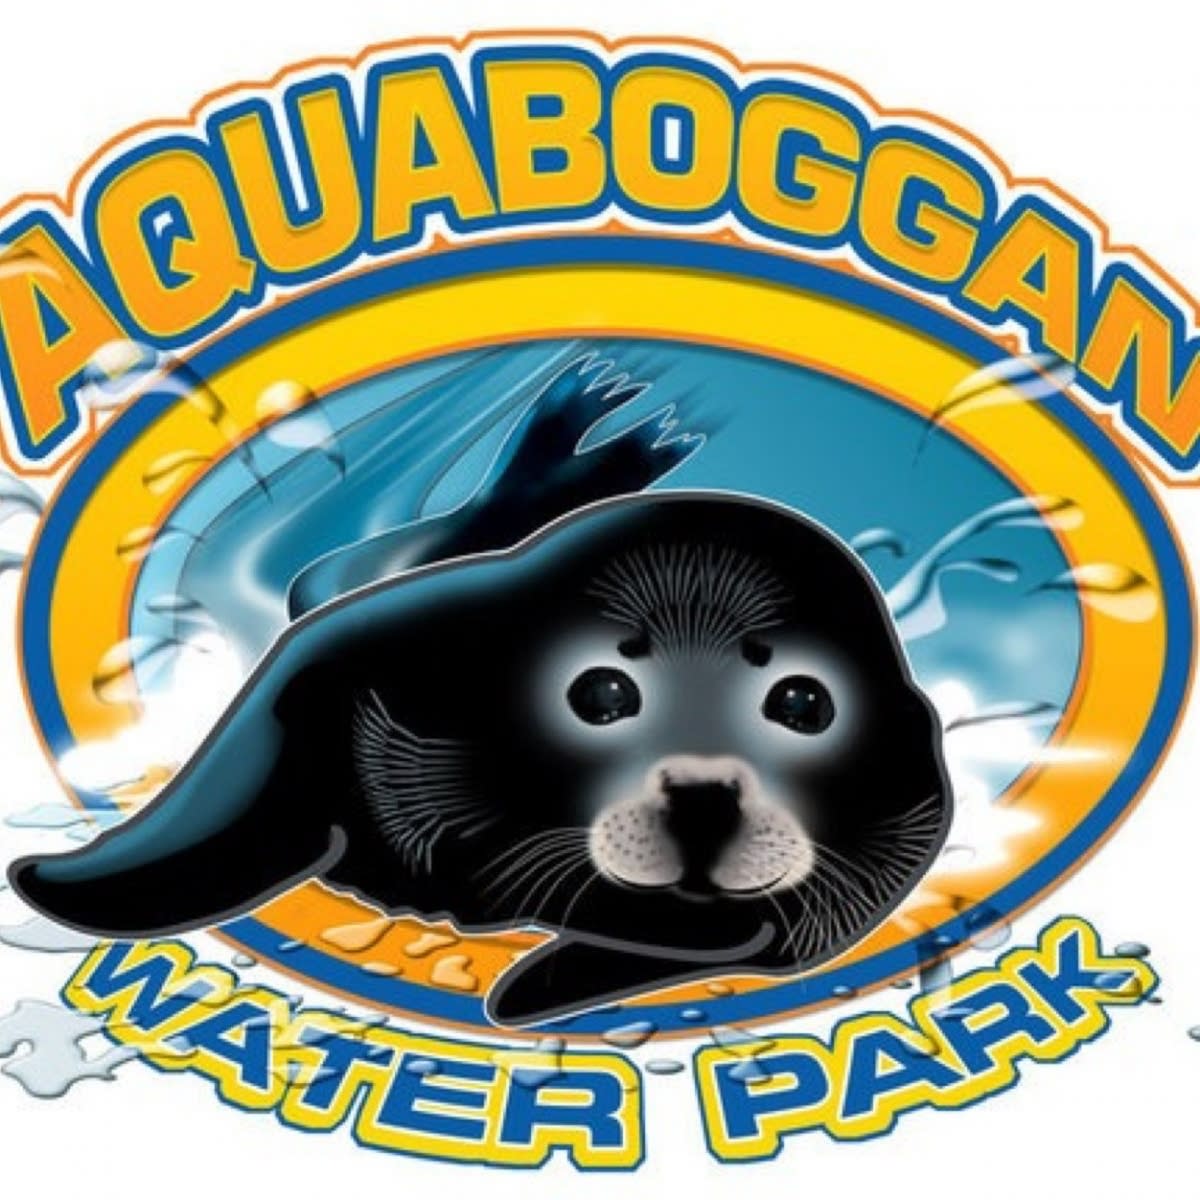 Aquaboggan Water Park